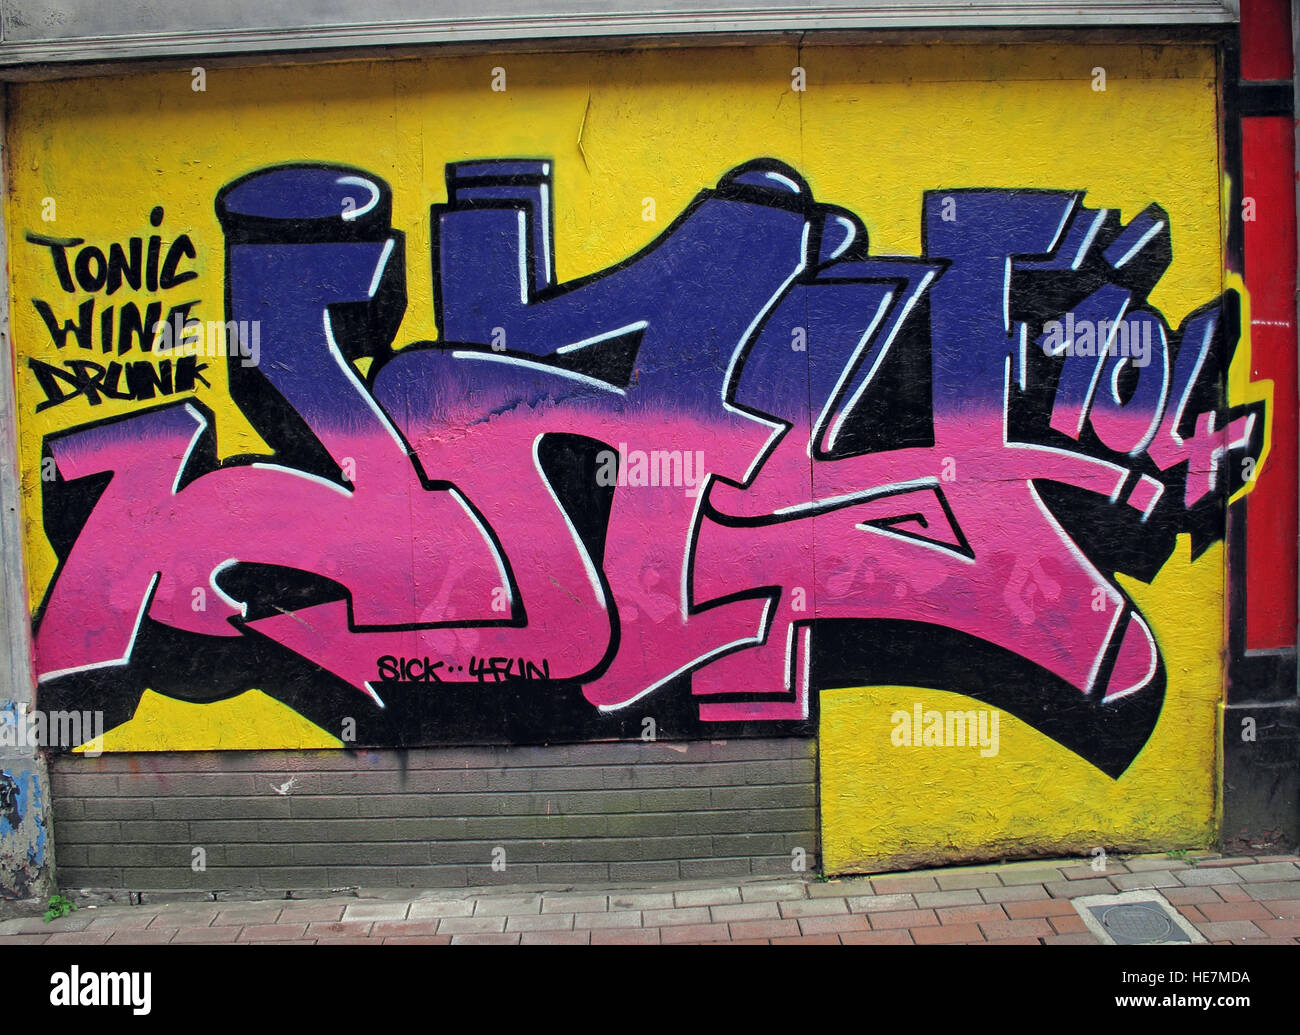 Tonic vino bebido, arte graffiti,Garfield St del centro de la ciudad de Belfast, Irlanda del Norte, REINO UNIDO Foto de stock